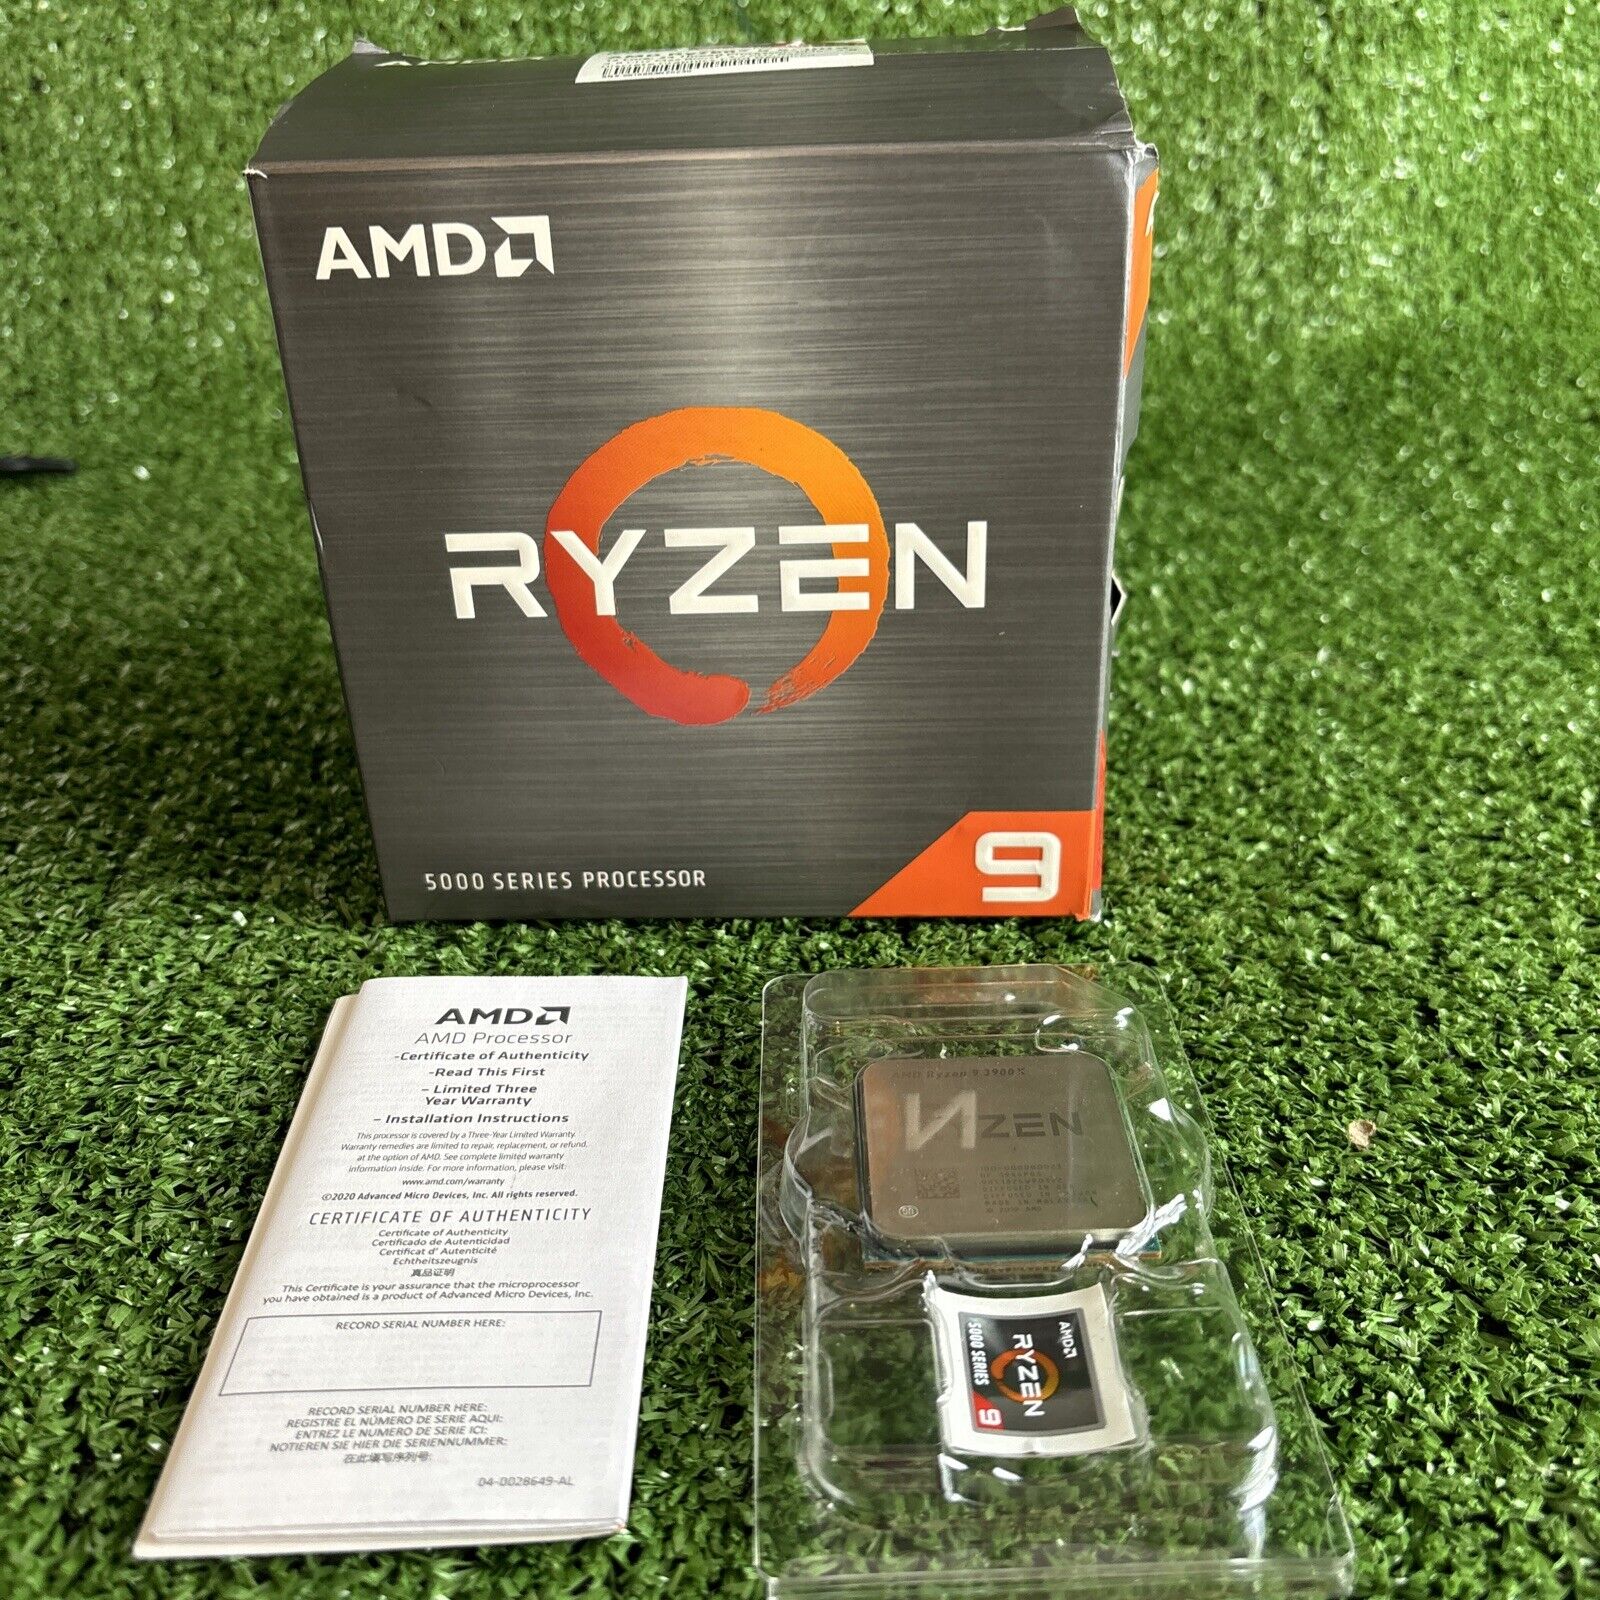 AMD Ryzen 9 3900x Desktop Processor (4.9GHz, 16 Cores, Socket AM4) READ DESCRIP.